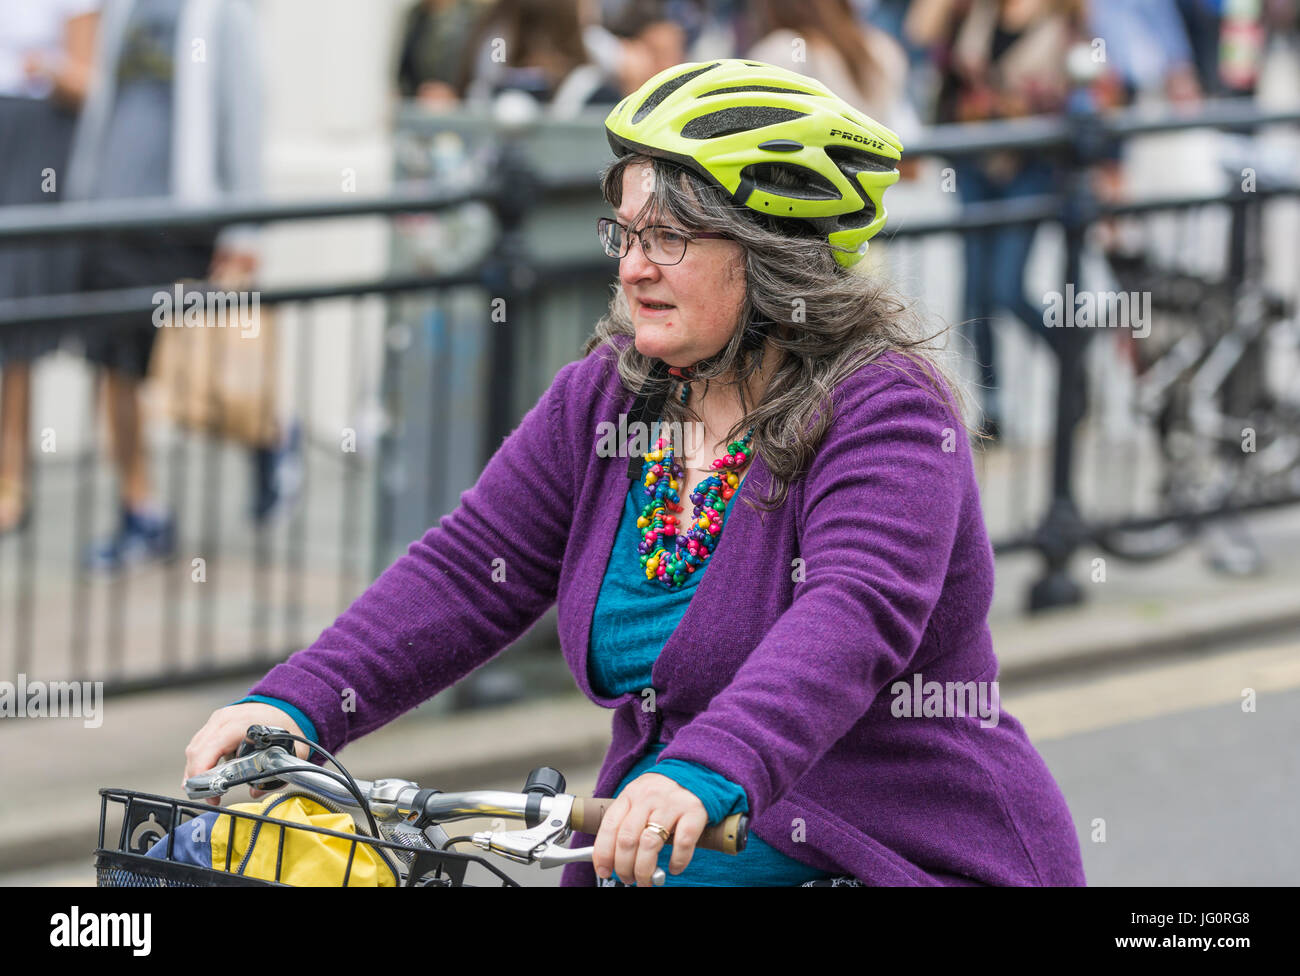 Di mezza età ciclista femmina di una bicicletta mentre indossa un casco in una città. Foto Stock